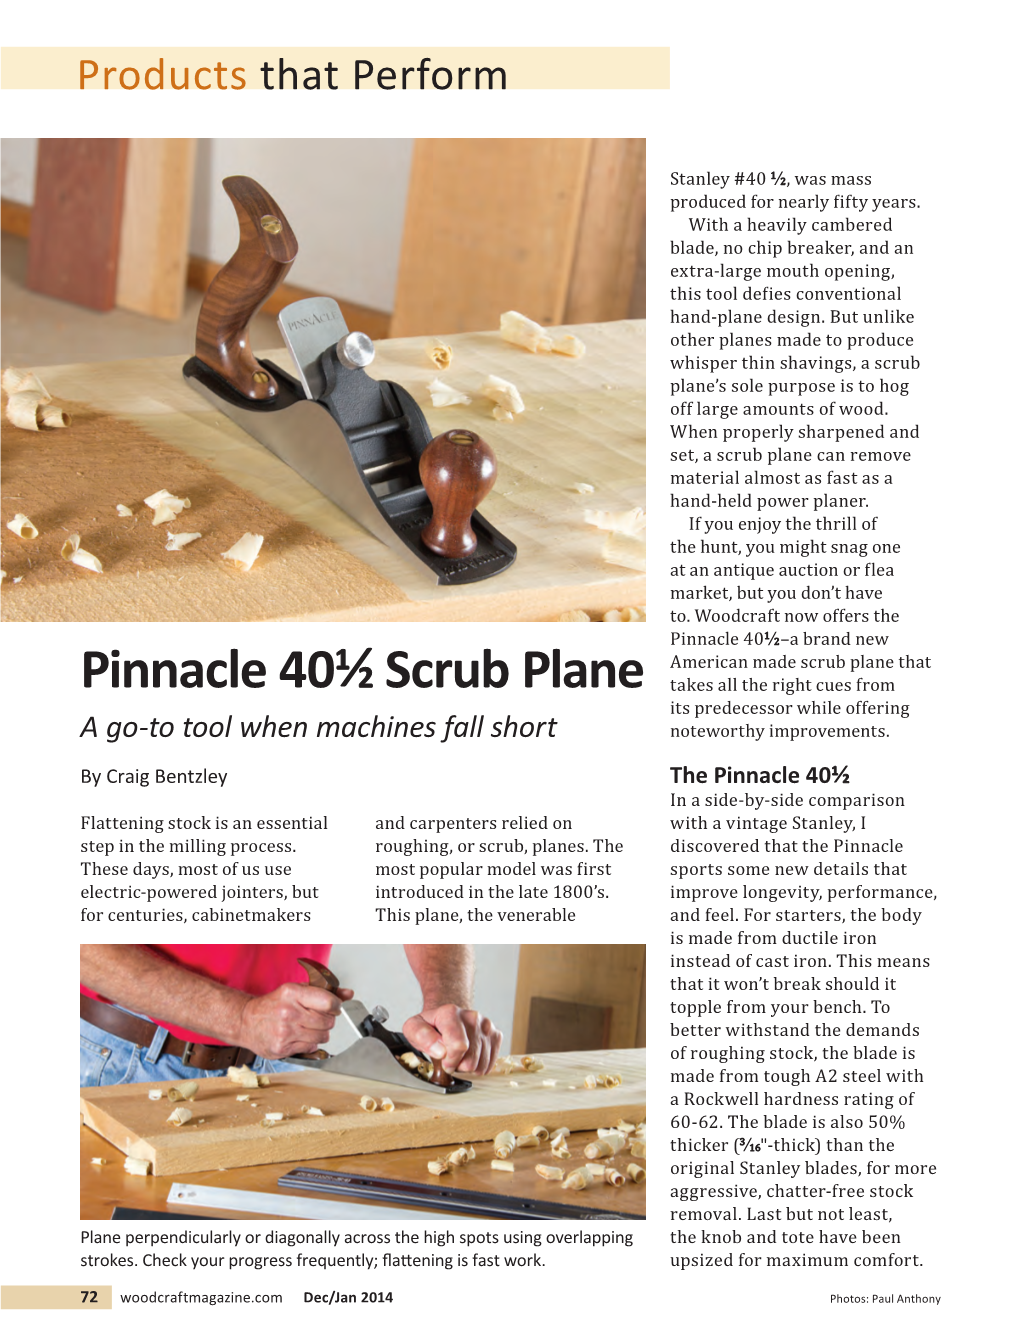 Pinnacle 401 ⁄2 Scrub Plane